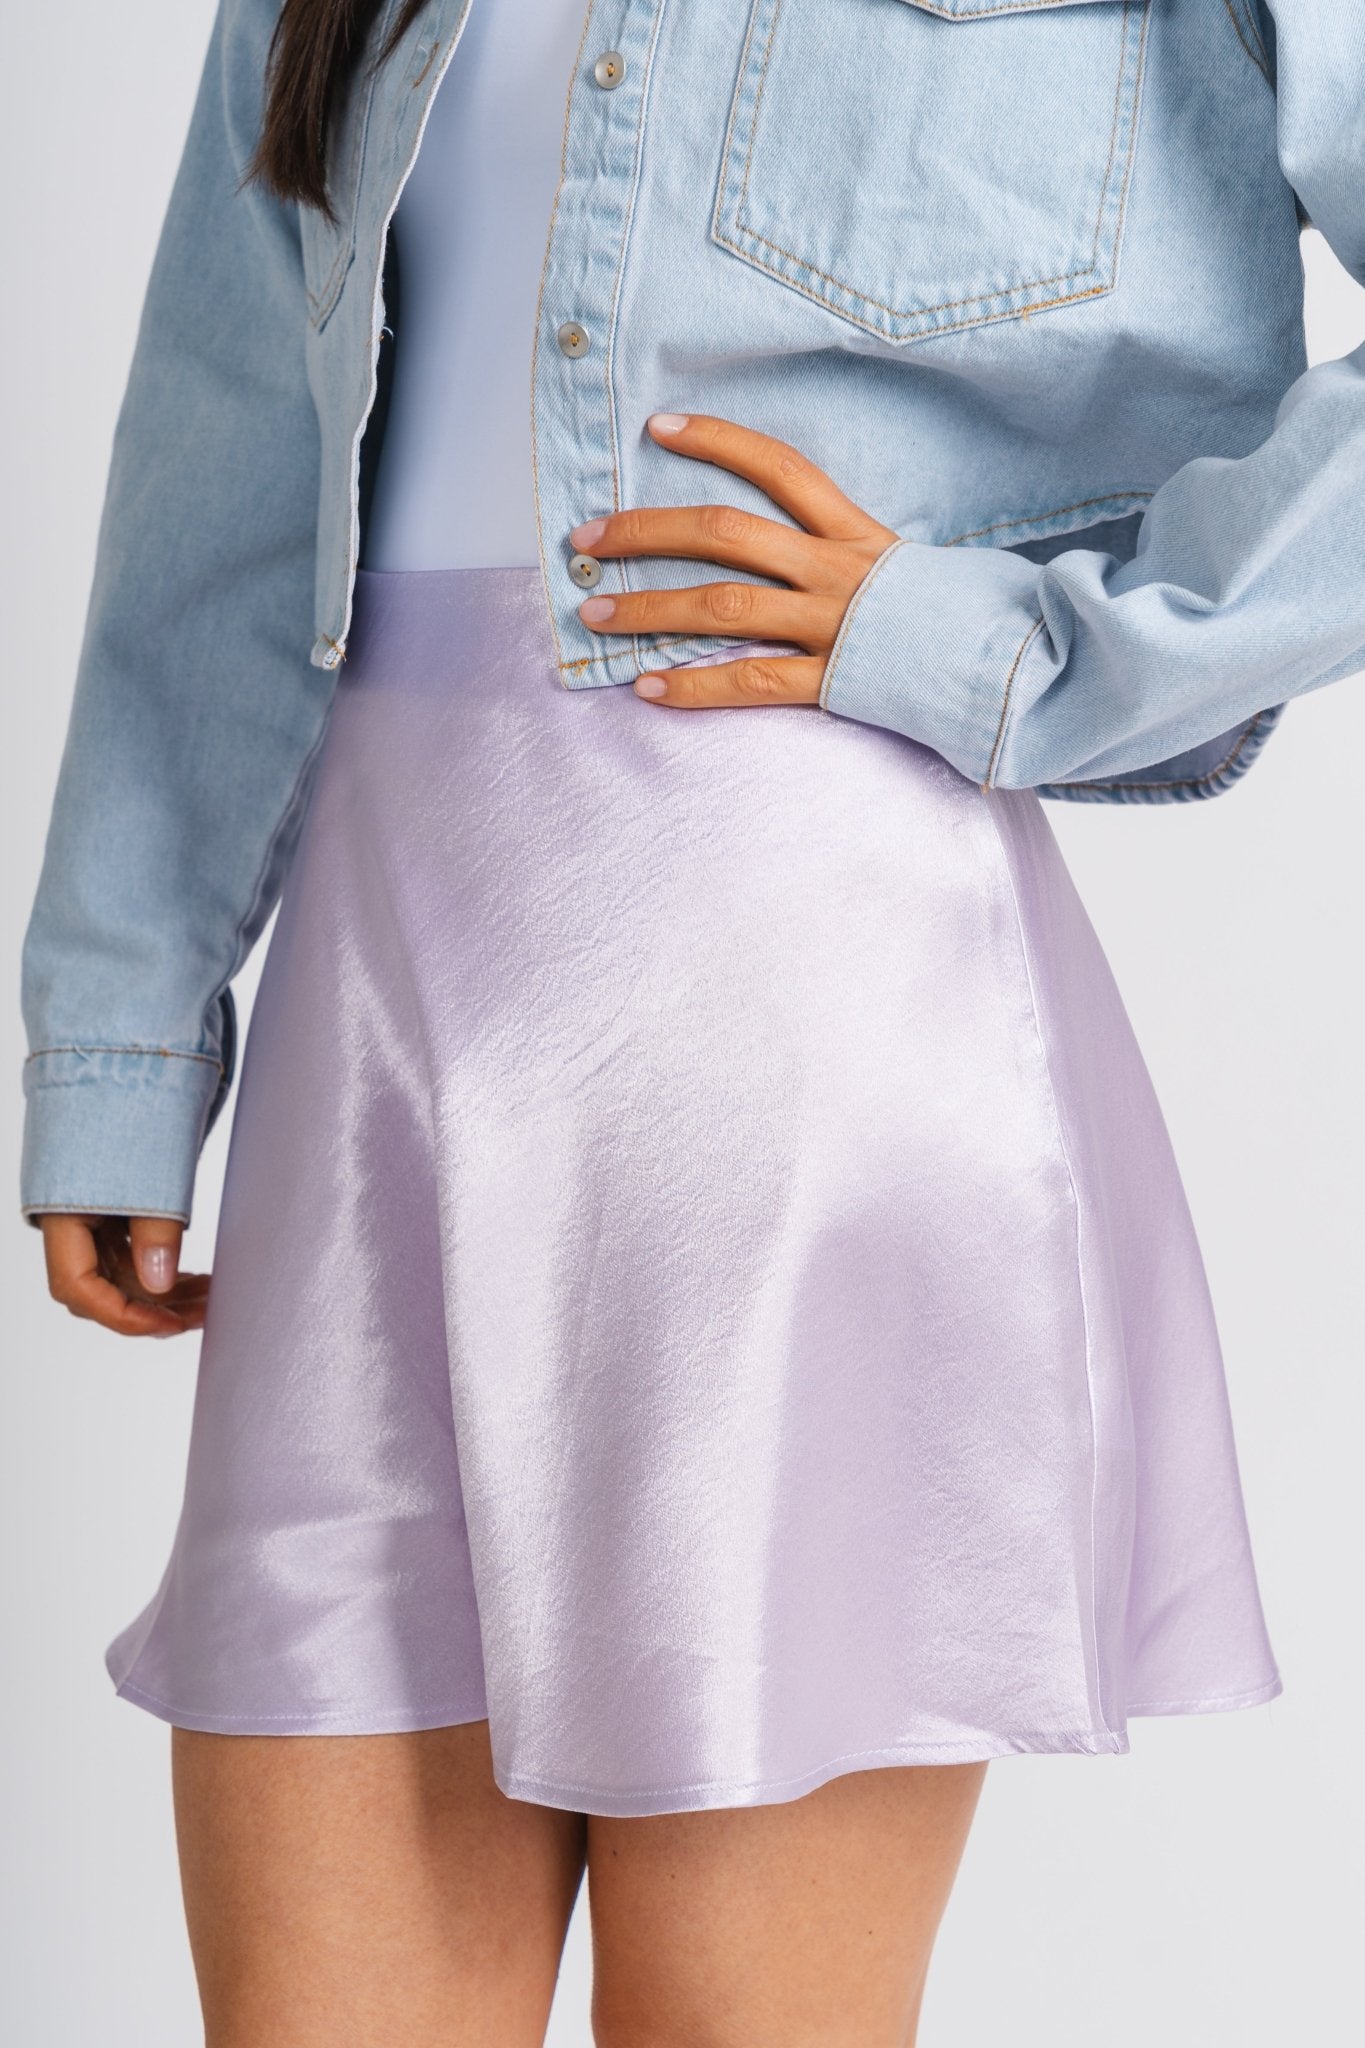 Satin flare mini skirt lavender - Trendy Skirt - Fun Easter Looks at Lush Fashion Lounge Boutique in Oklahoma